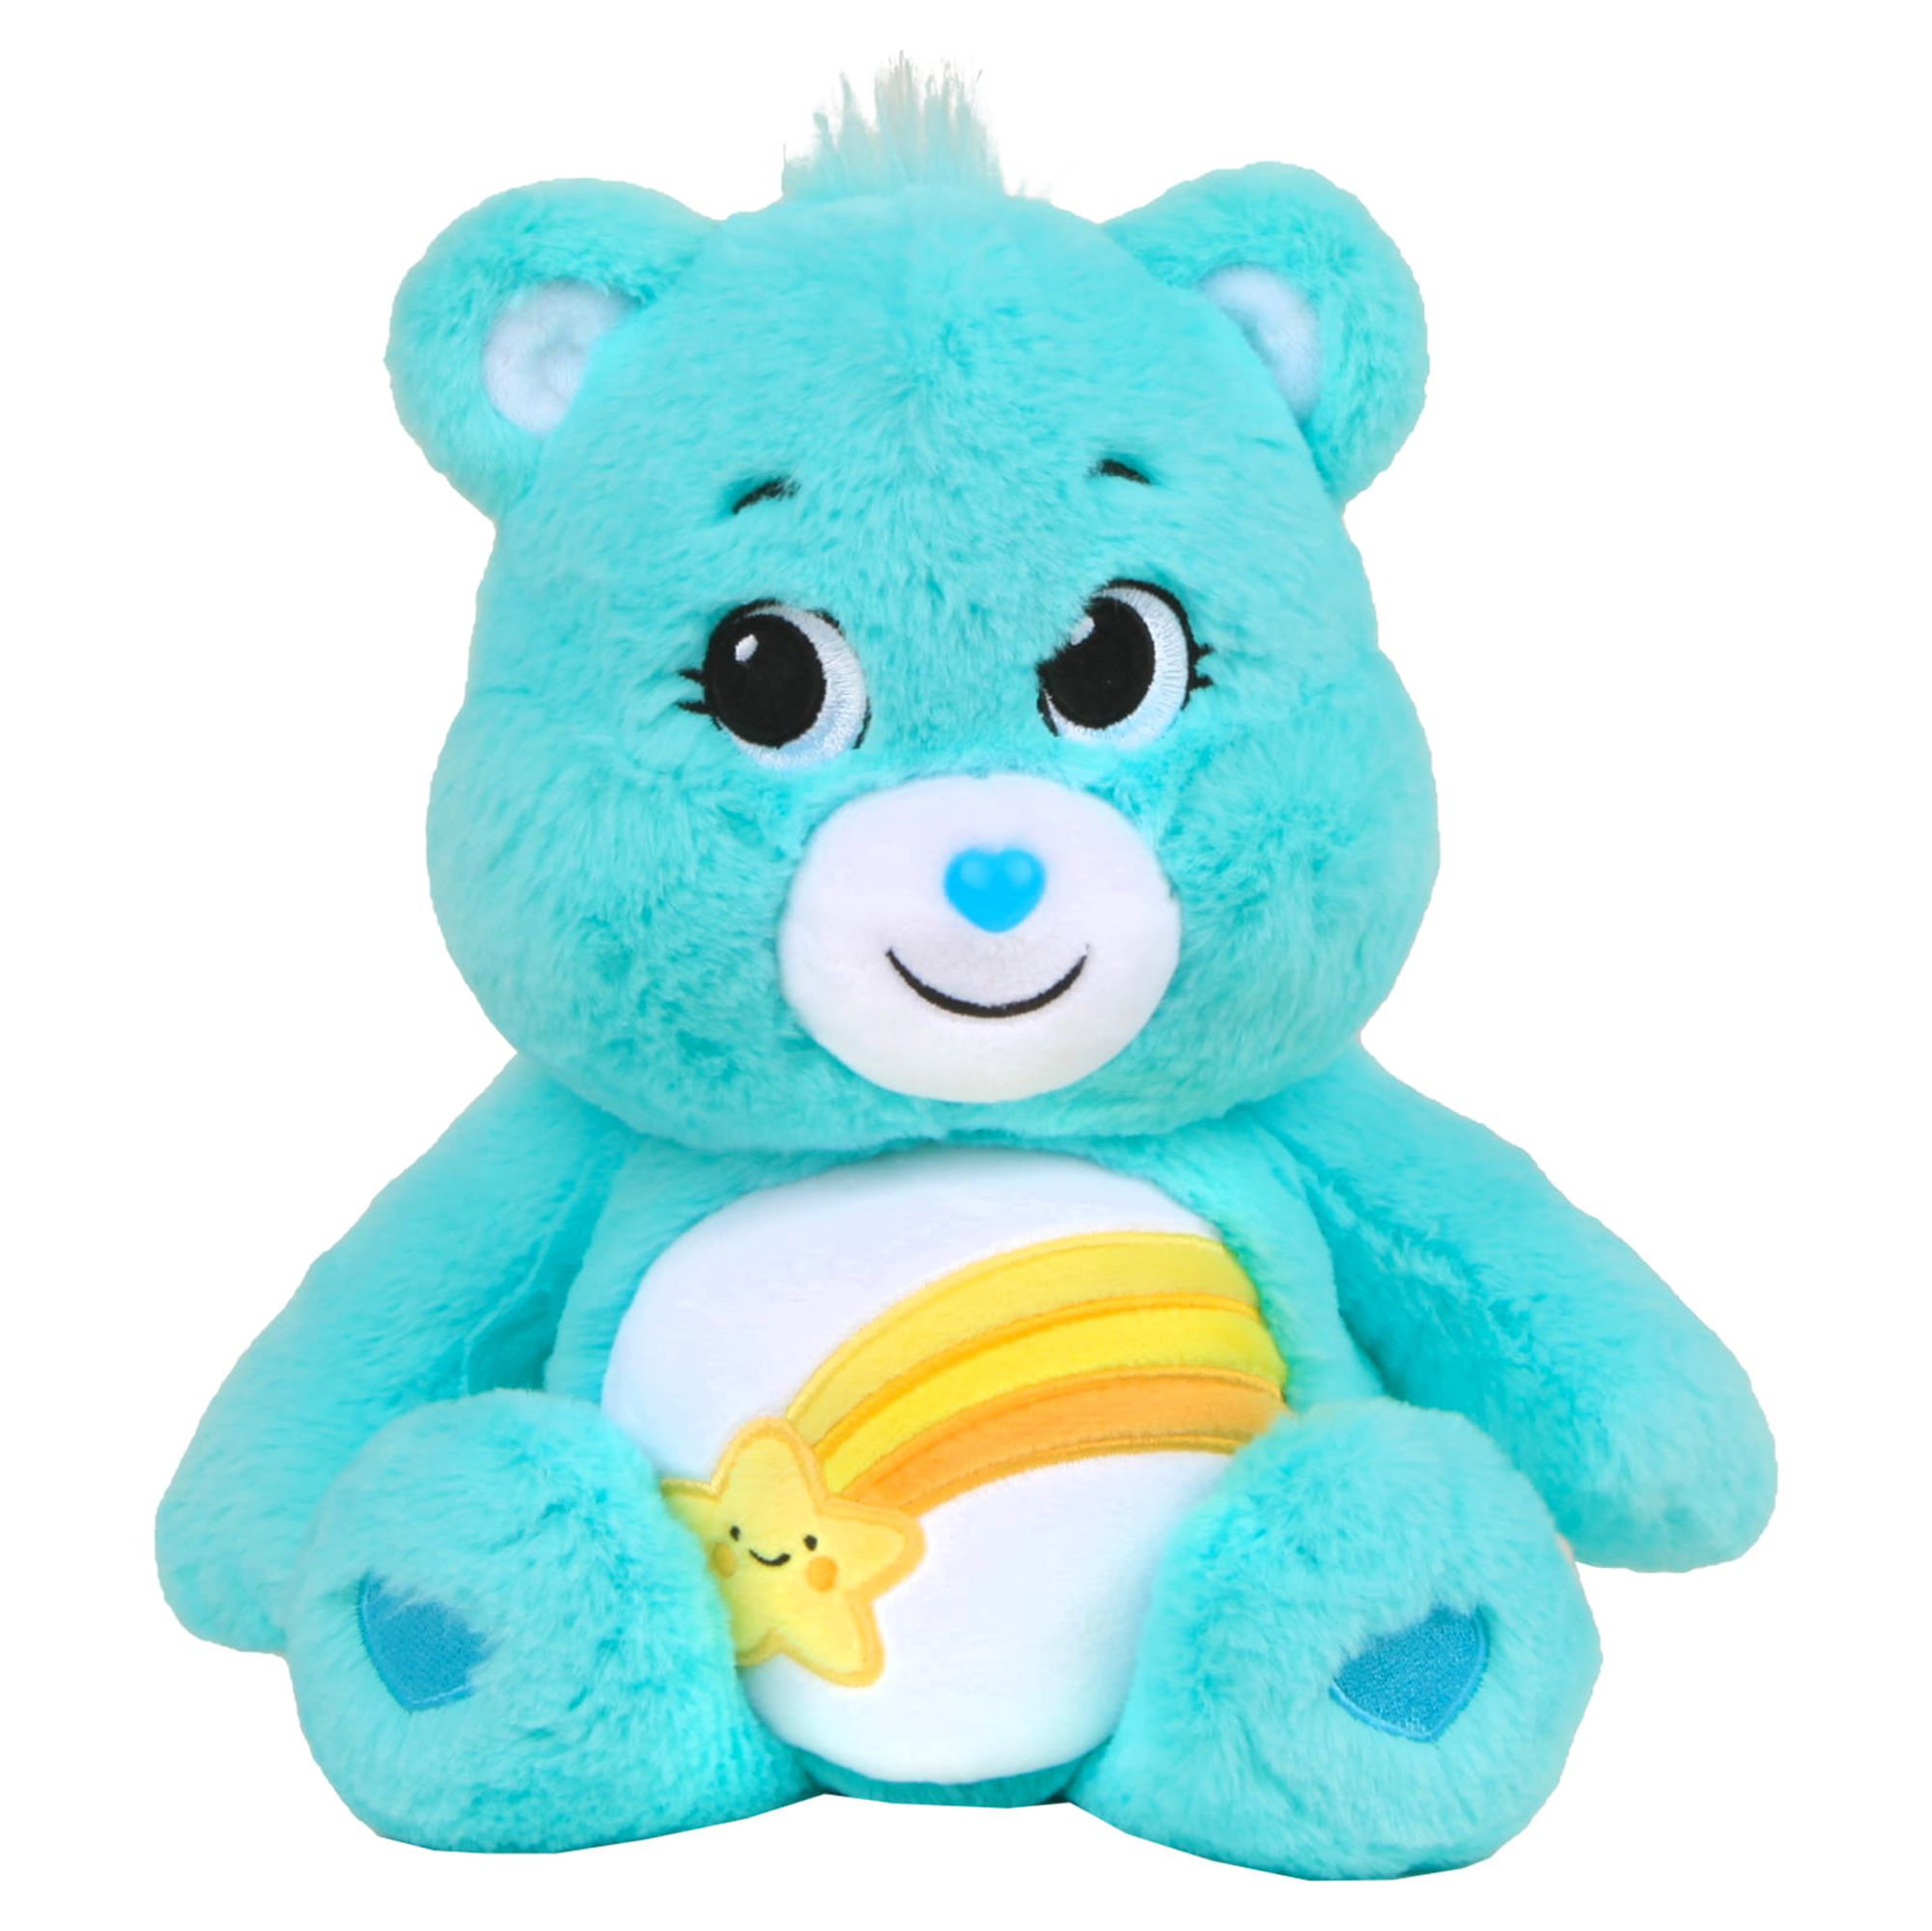 Care Bears 14" Plush - Wish Bear - Soft Huggable Material! - image 5 of 14